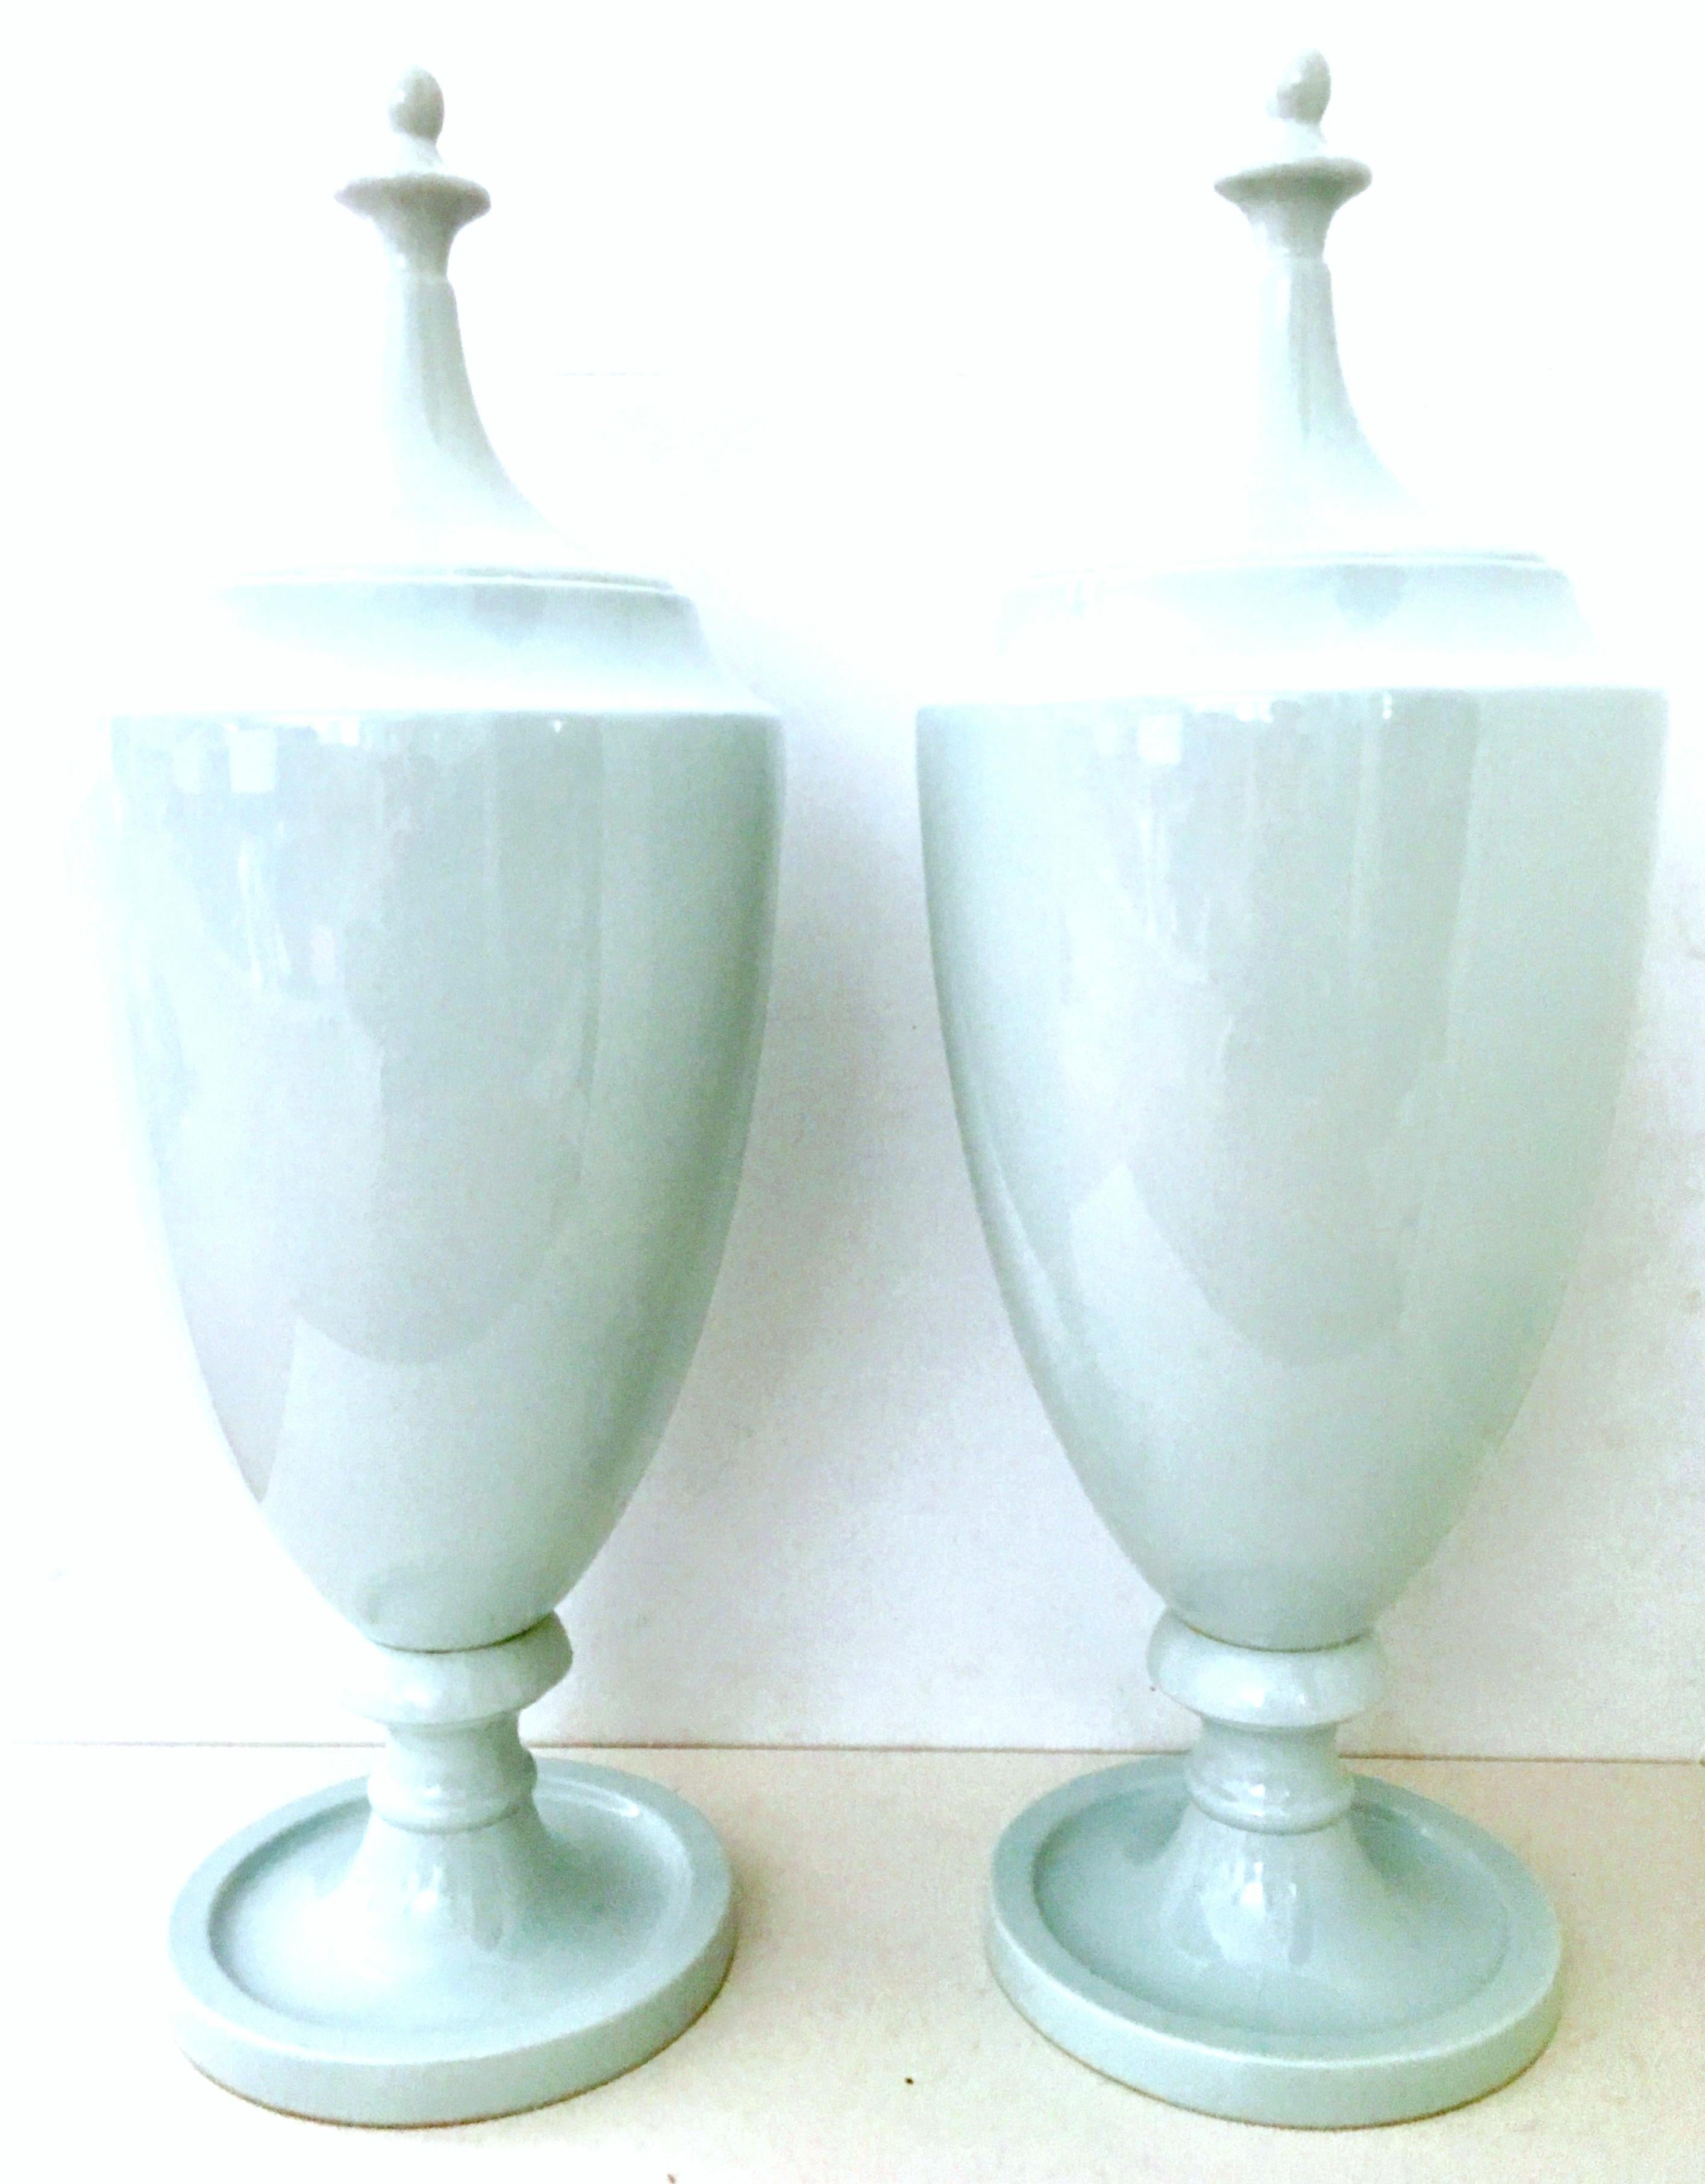 21st Century pair of contemporary ceramic glaze robins egg blue lidded floor ginger jar urns. Each urn stands 32